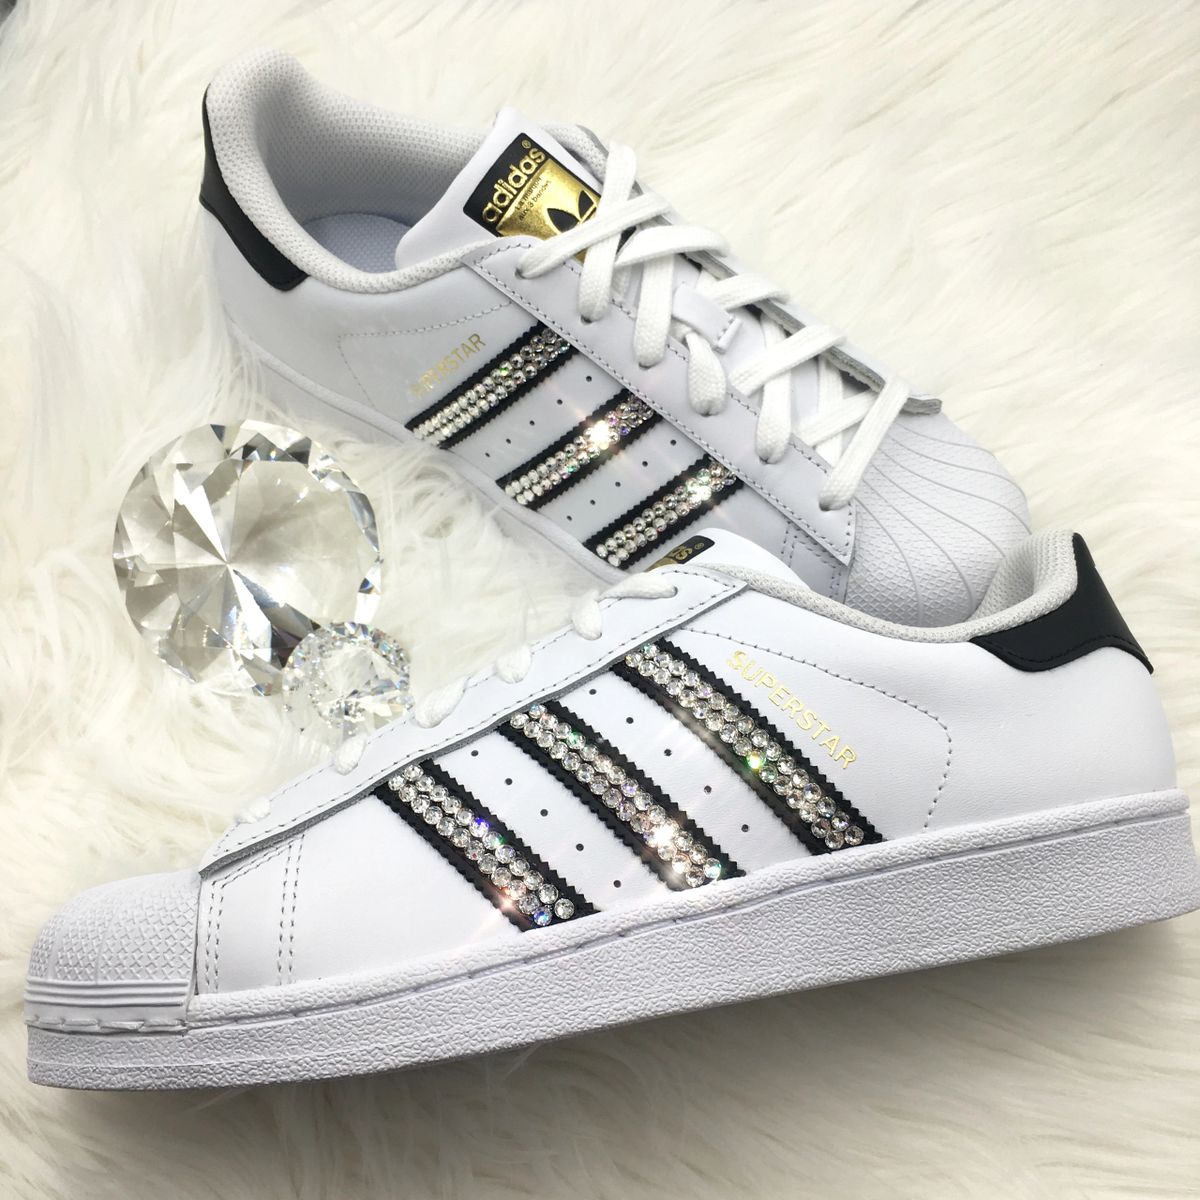 Swarovski Bling Adidas Superstar Shoes -White & Black